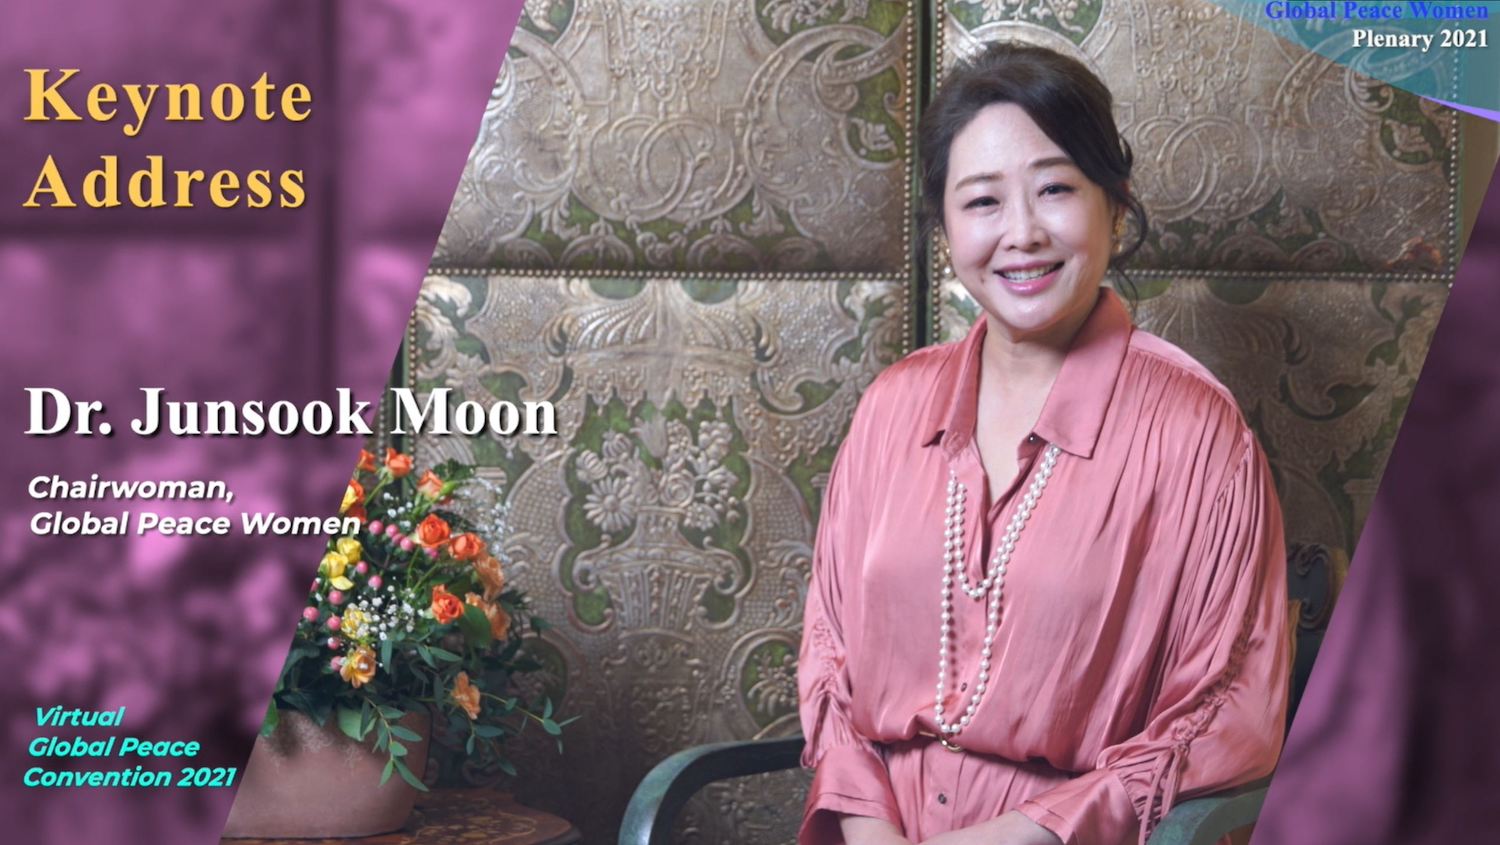 Dr. Junsook Moon, GPW Chairwoman